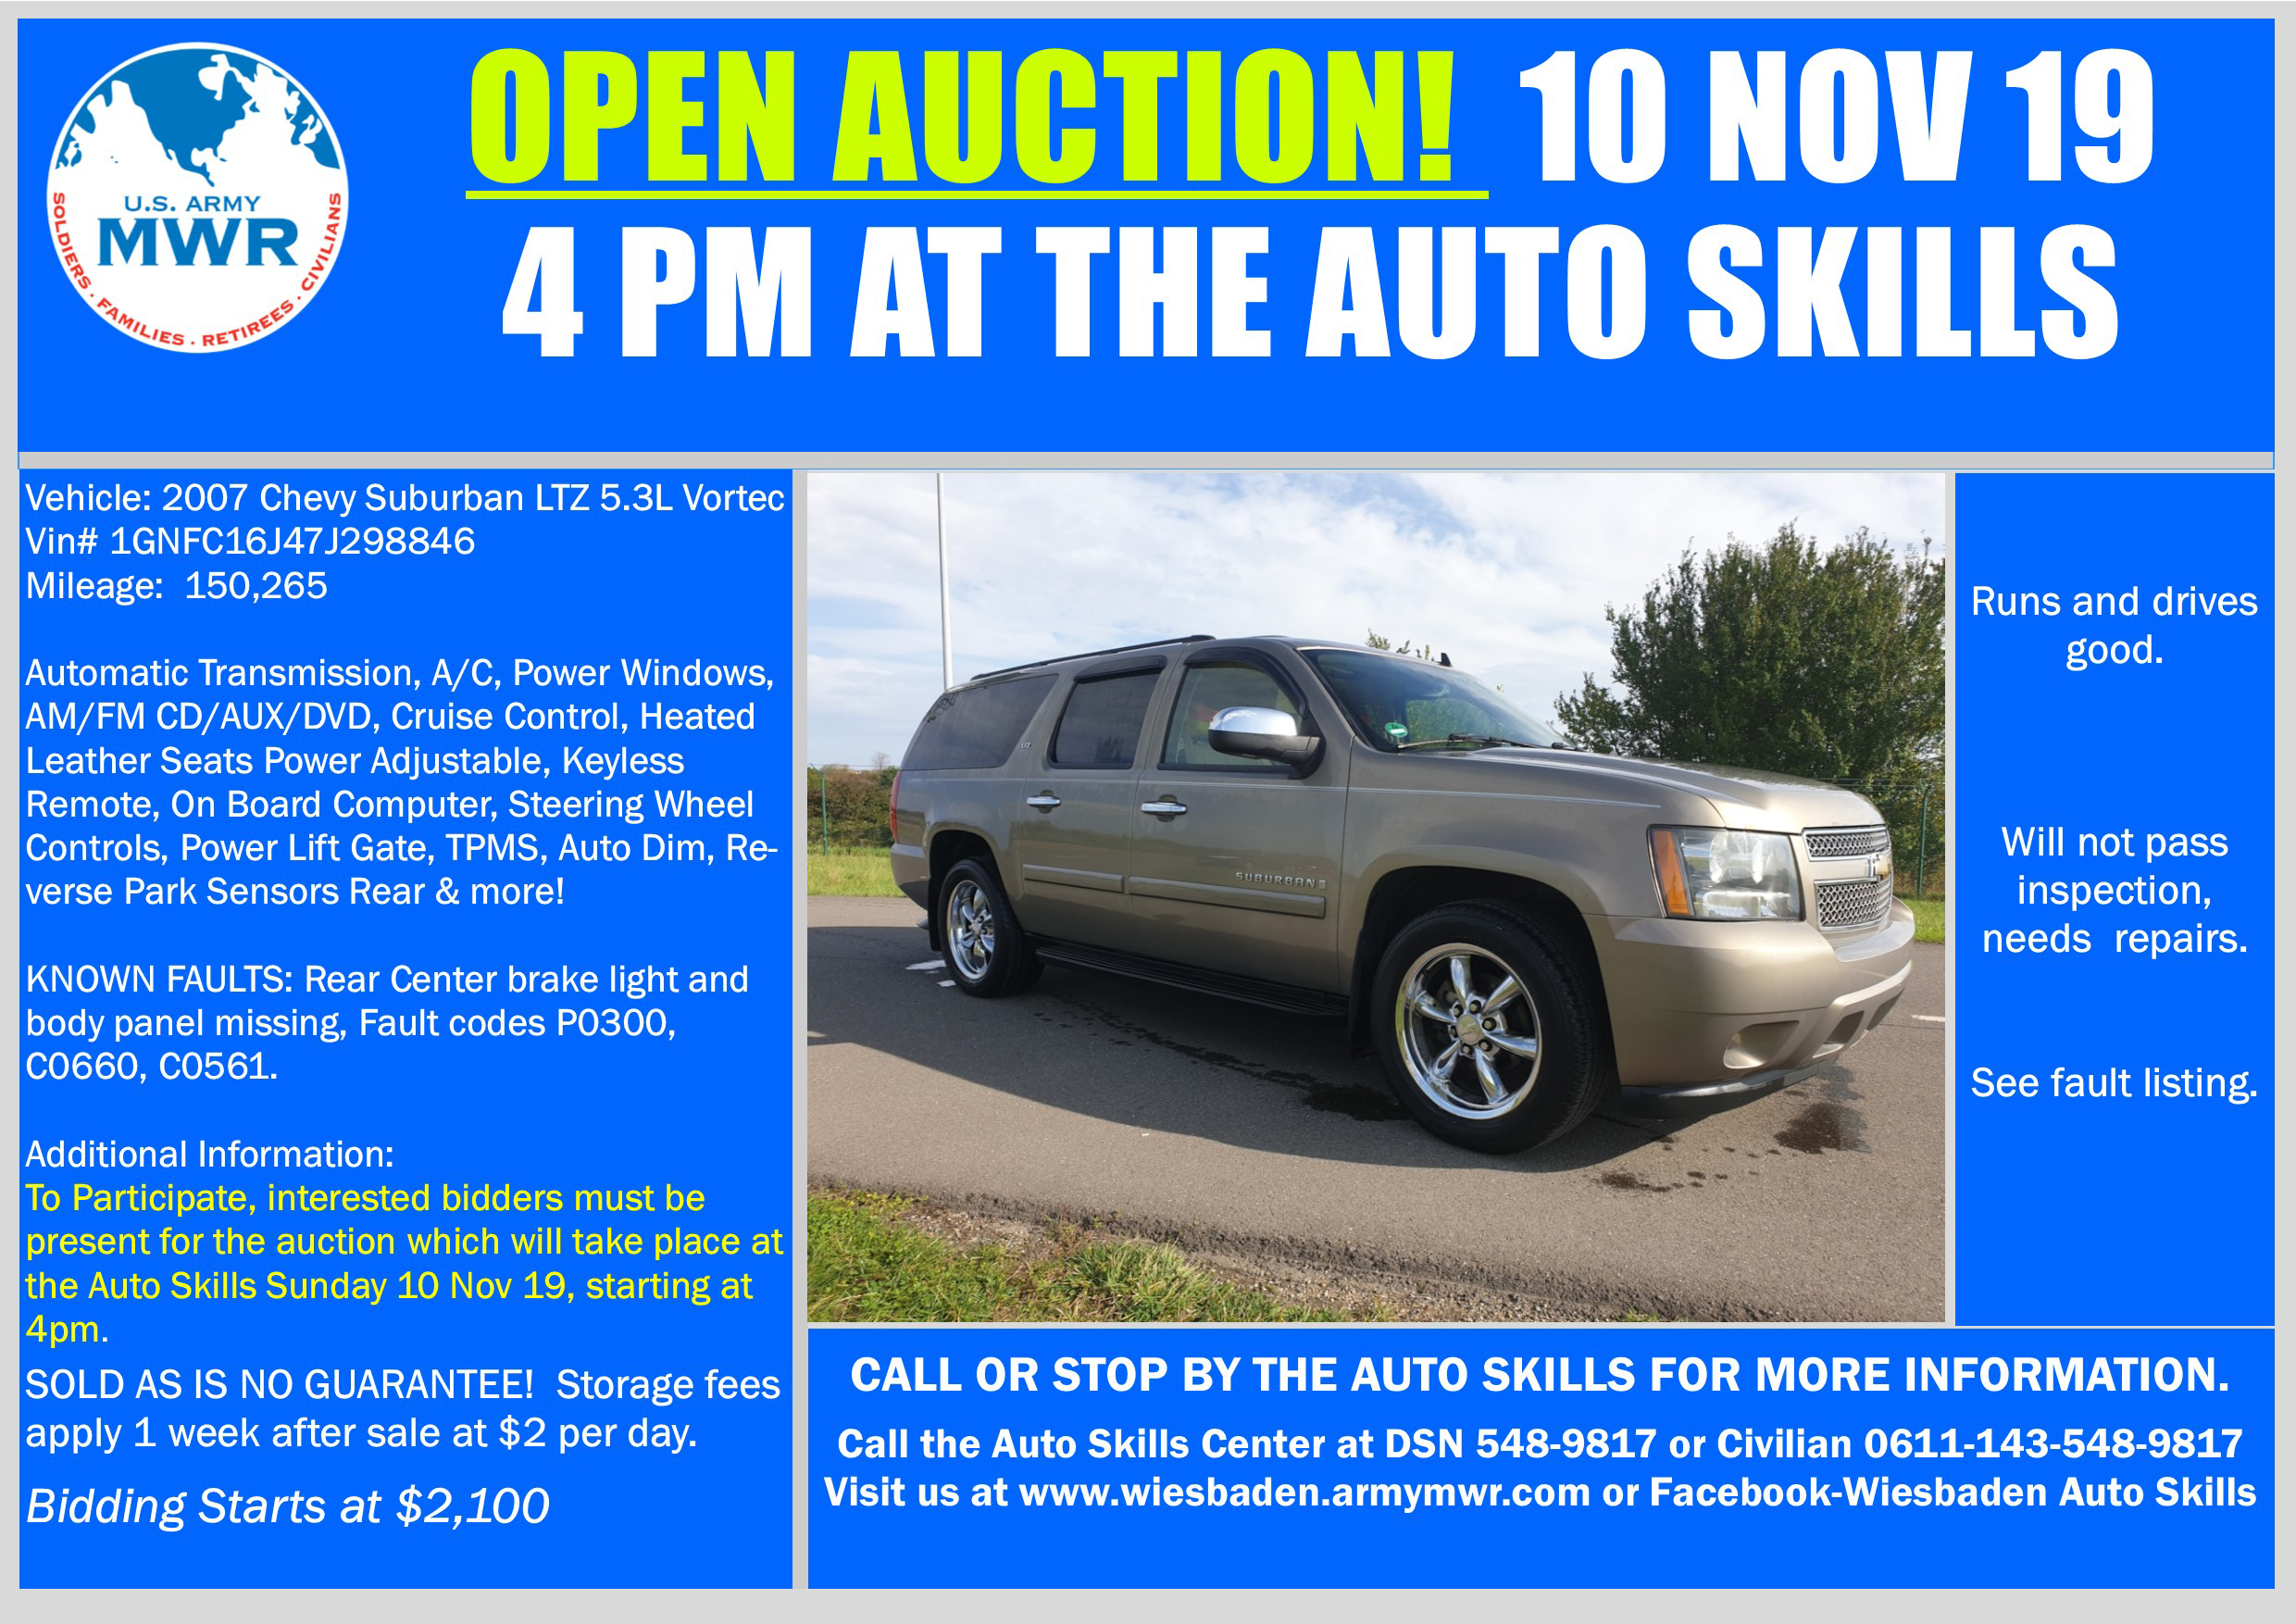 Sale Chevy Suburban 10 Nov 19 Open Auction.jpg